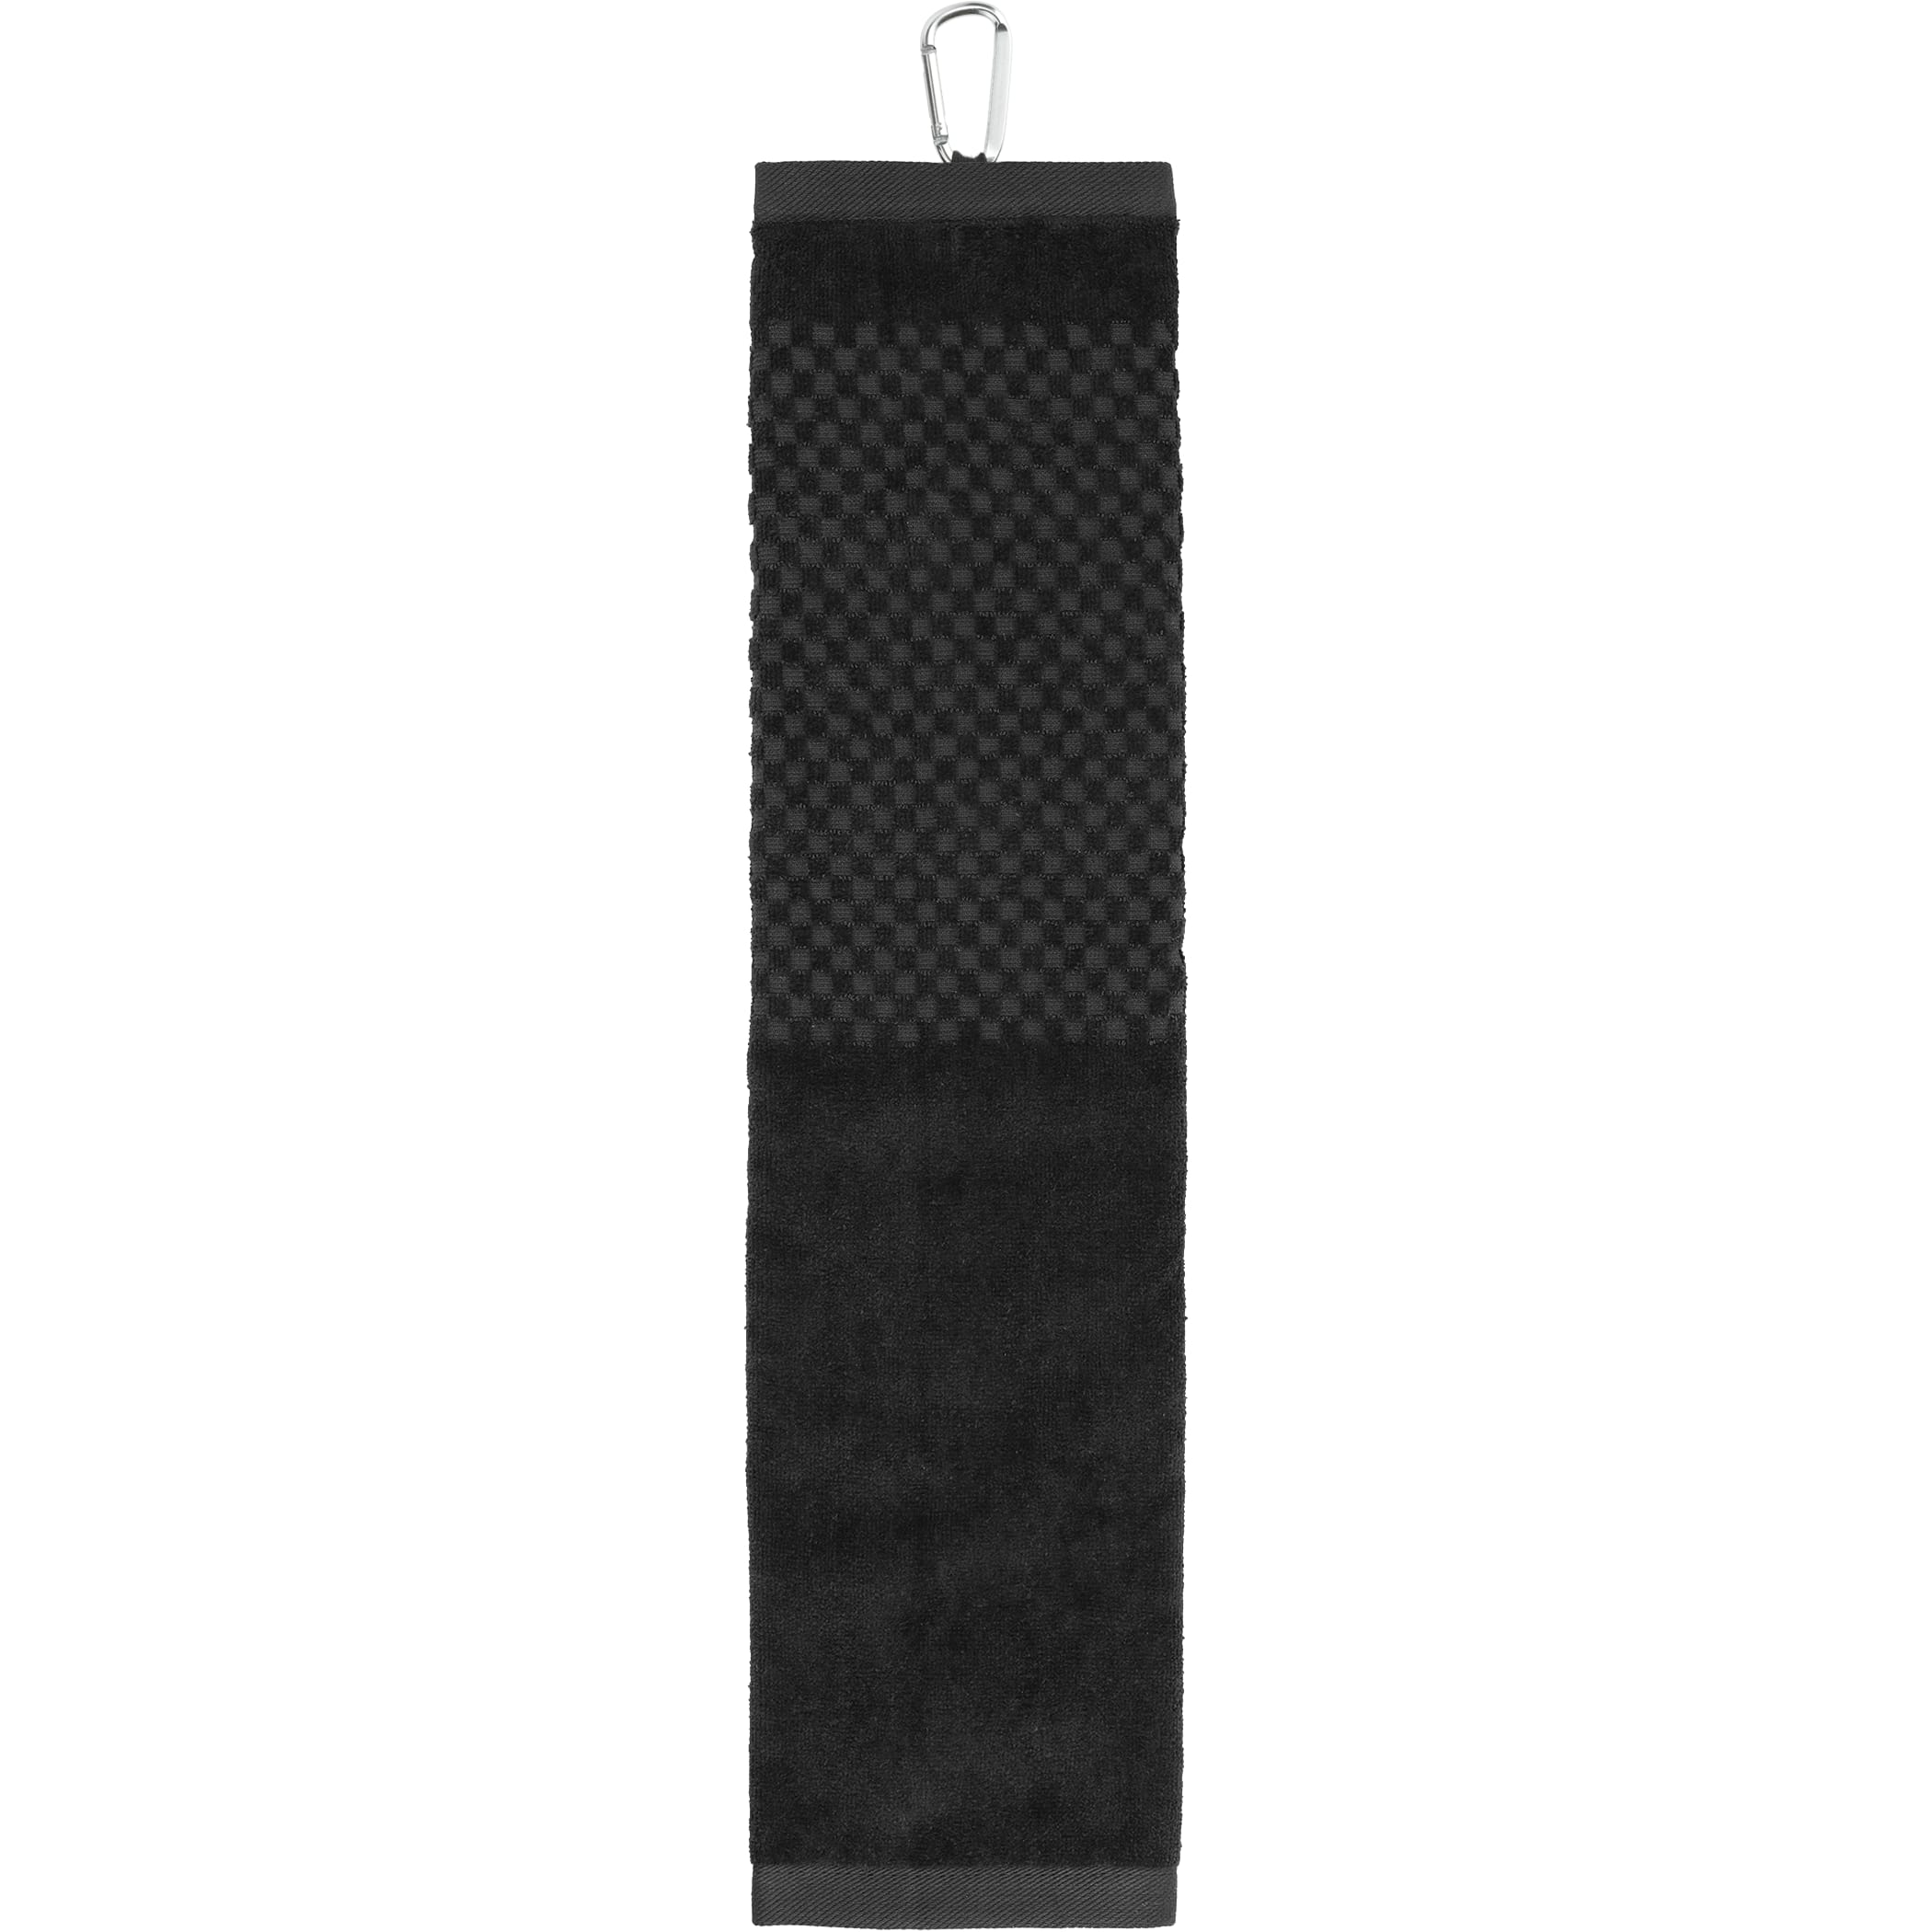 3.5lb./doz. 5.25x22in Scrubber Golf Towel